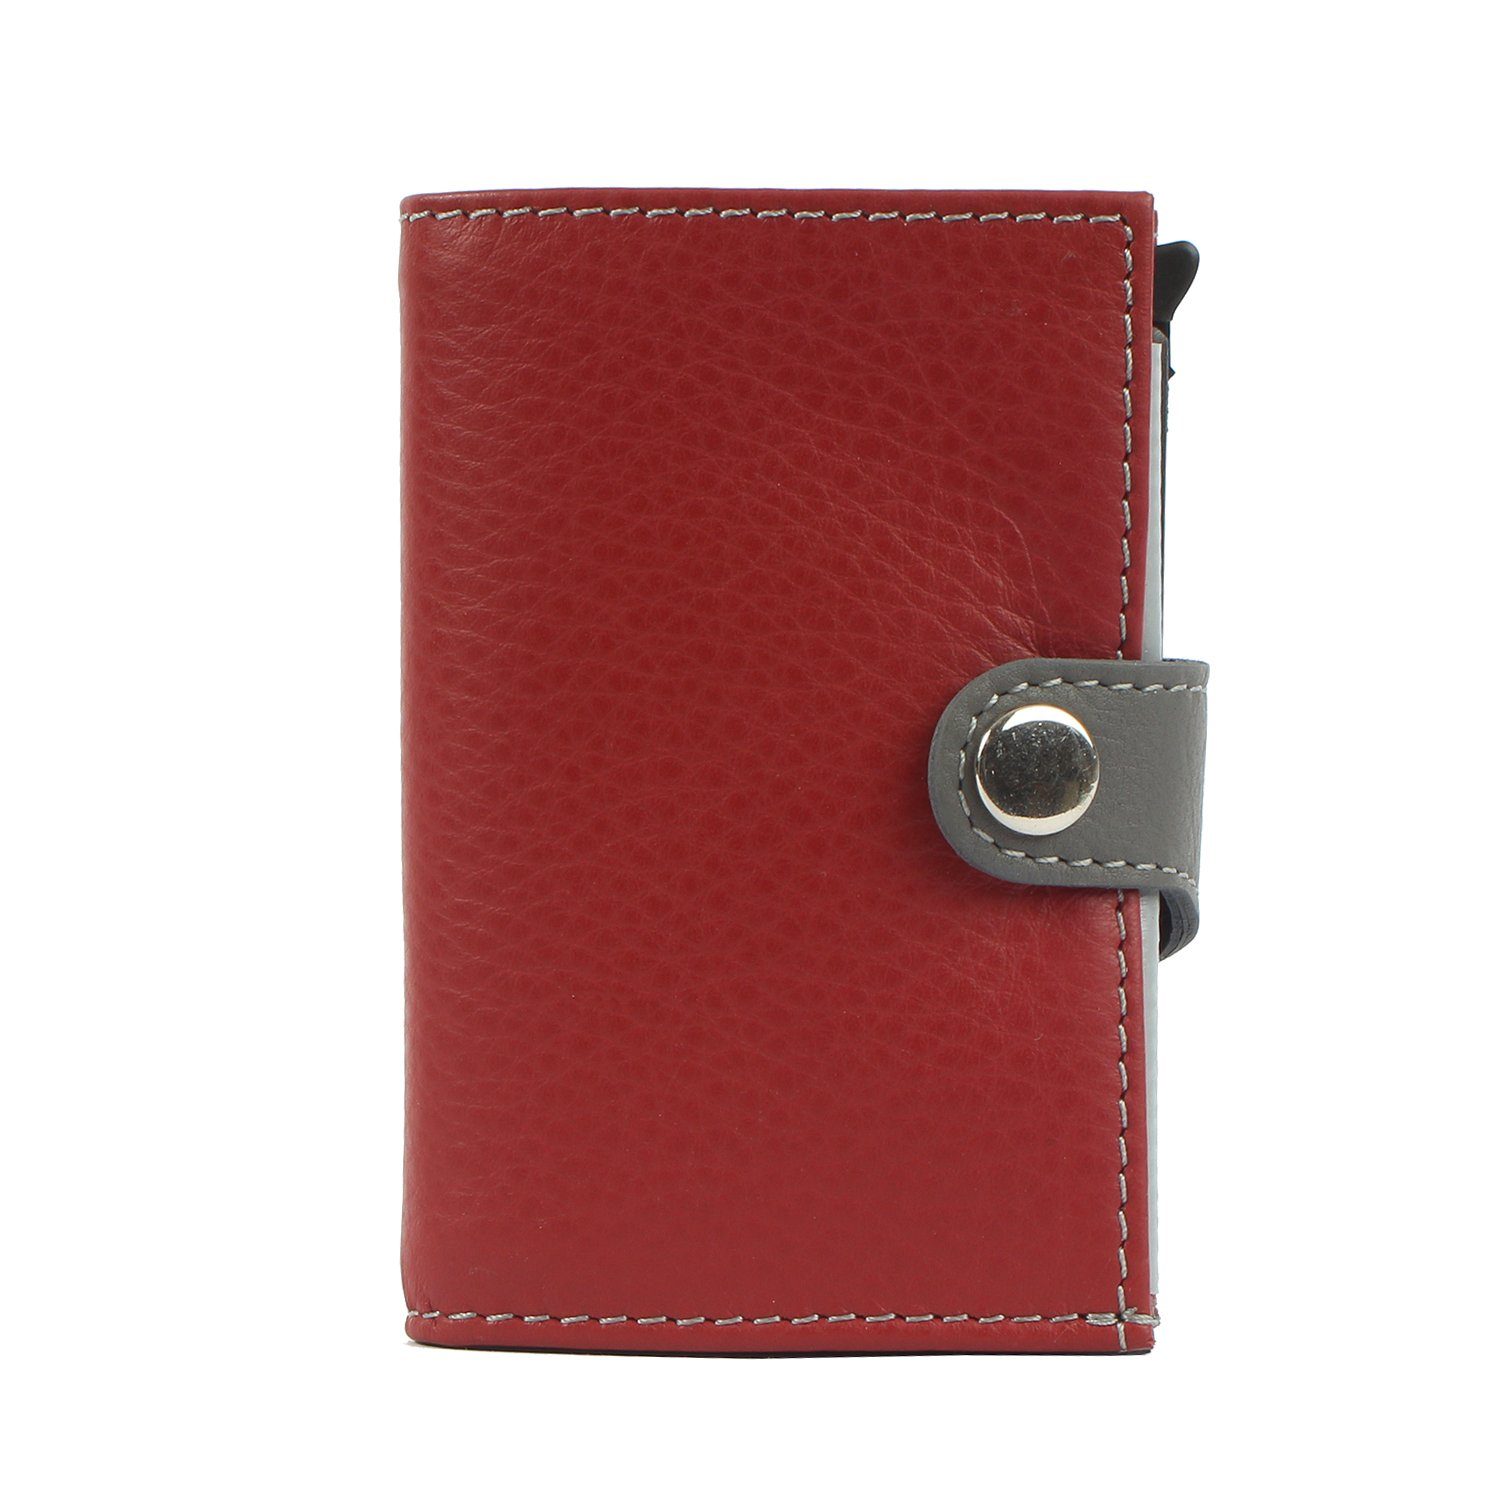 karminrot Leder Margelisch Kreditkartenbörse Mini aus single Upcycling leather, noonyu Geldbörse